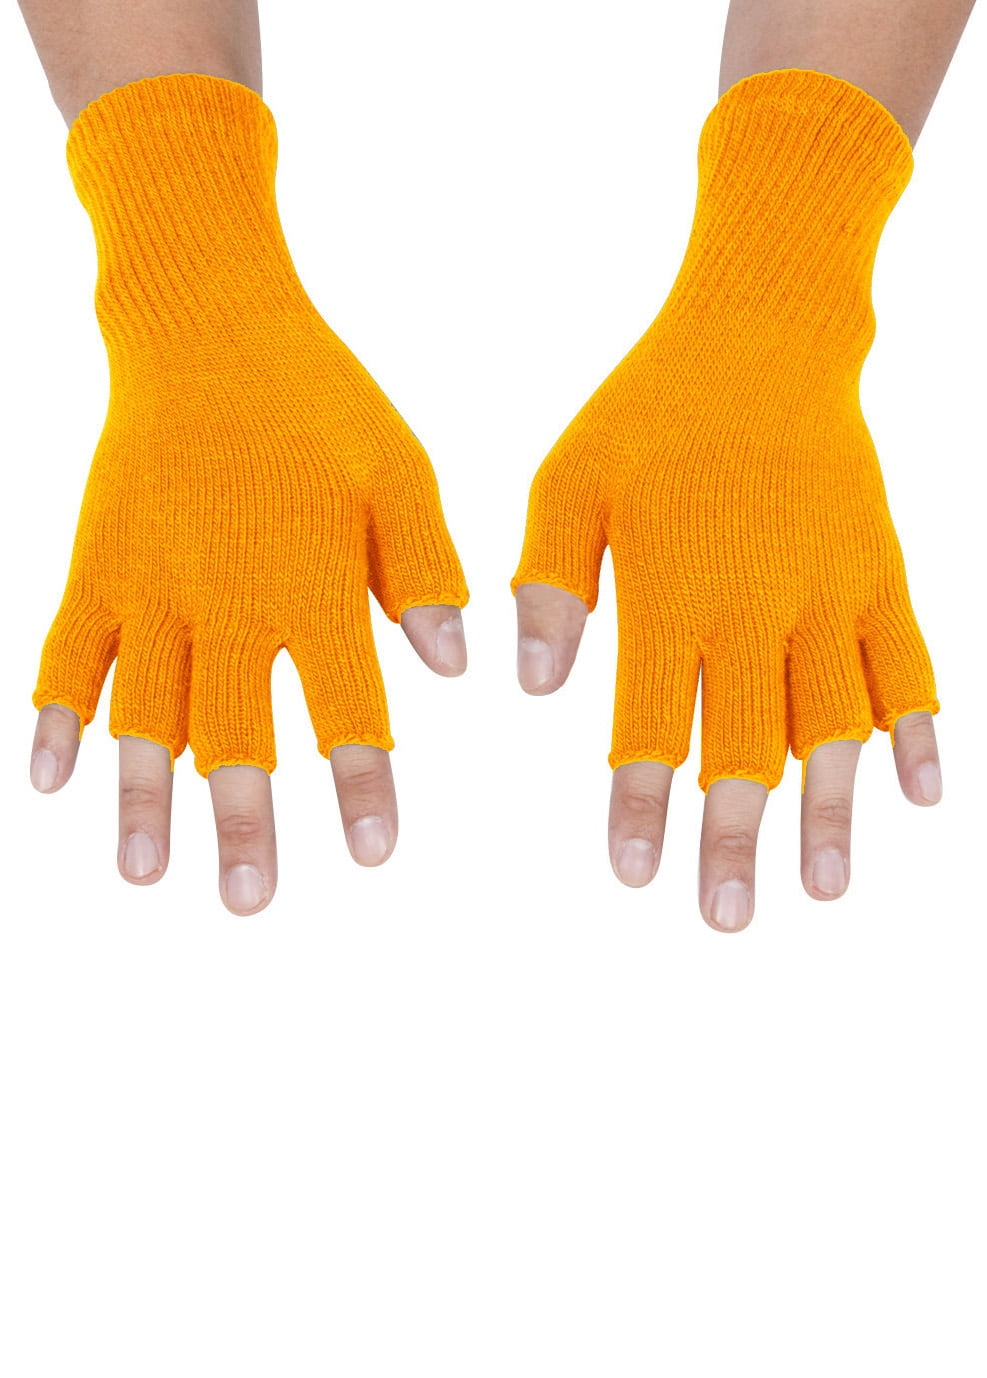 Stretchy Threads Fingerless Navy Knit Gloves, Unisex Warm Half Blue Gravity Finger